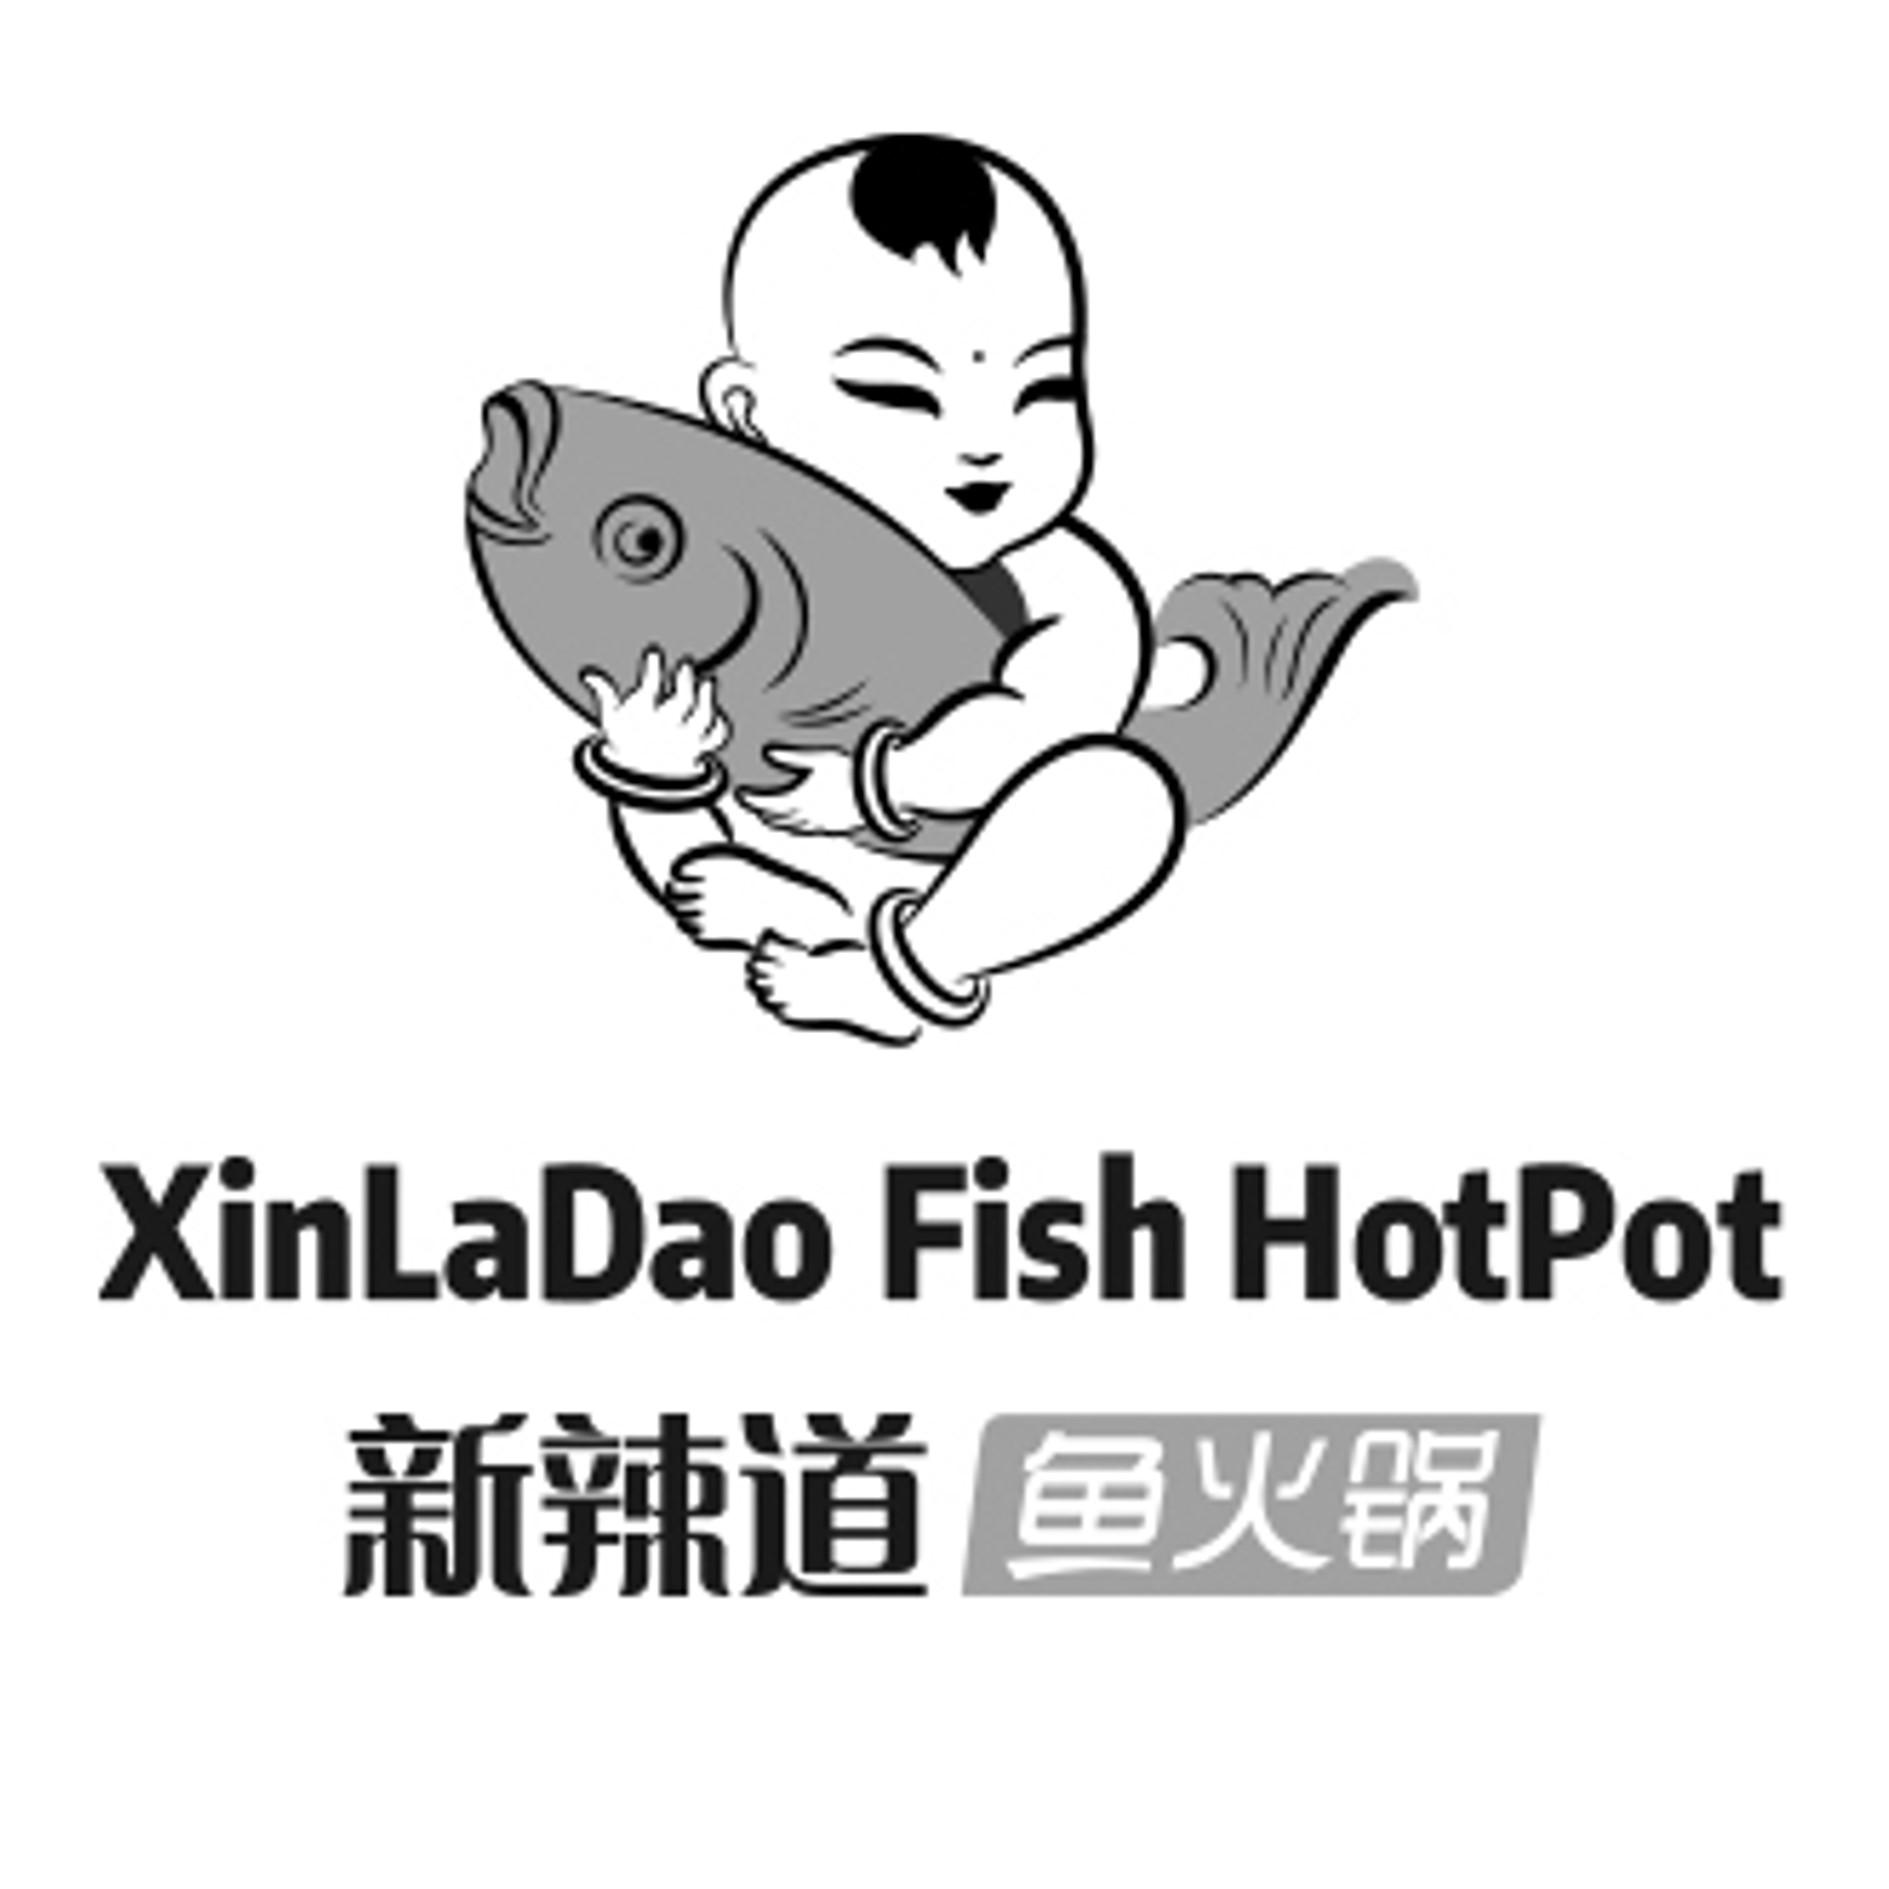 新辣道 鱼火锅 xinladao fish hotpot 商标公告